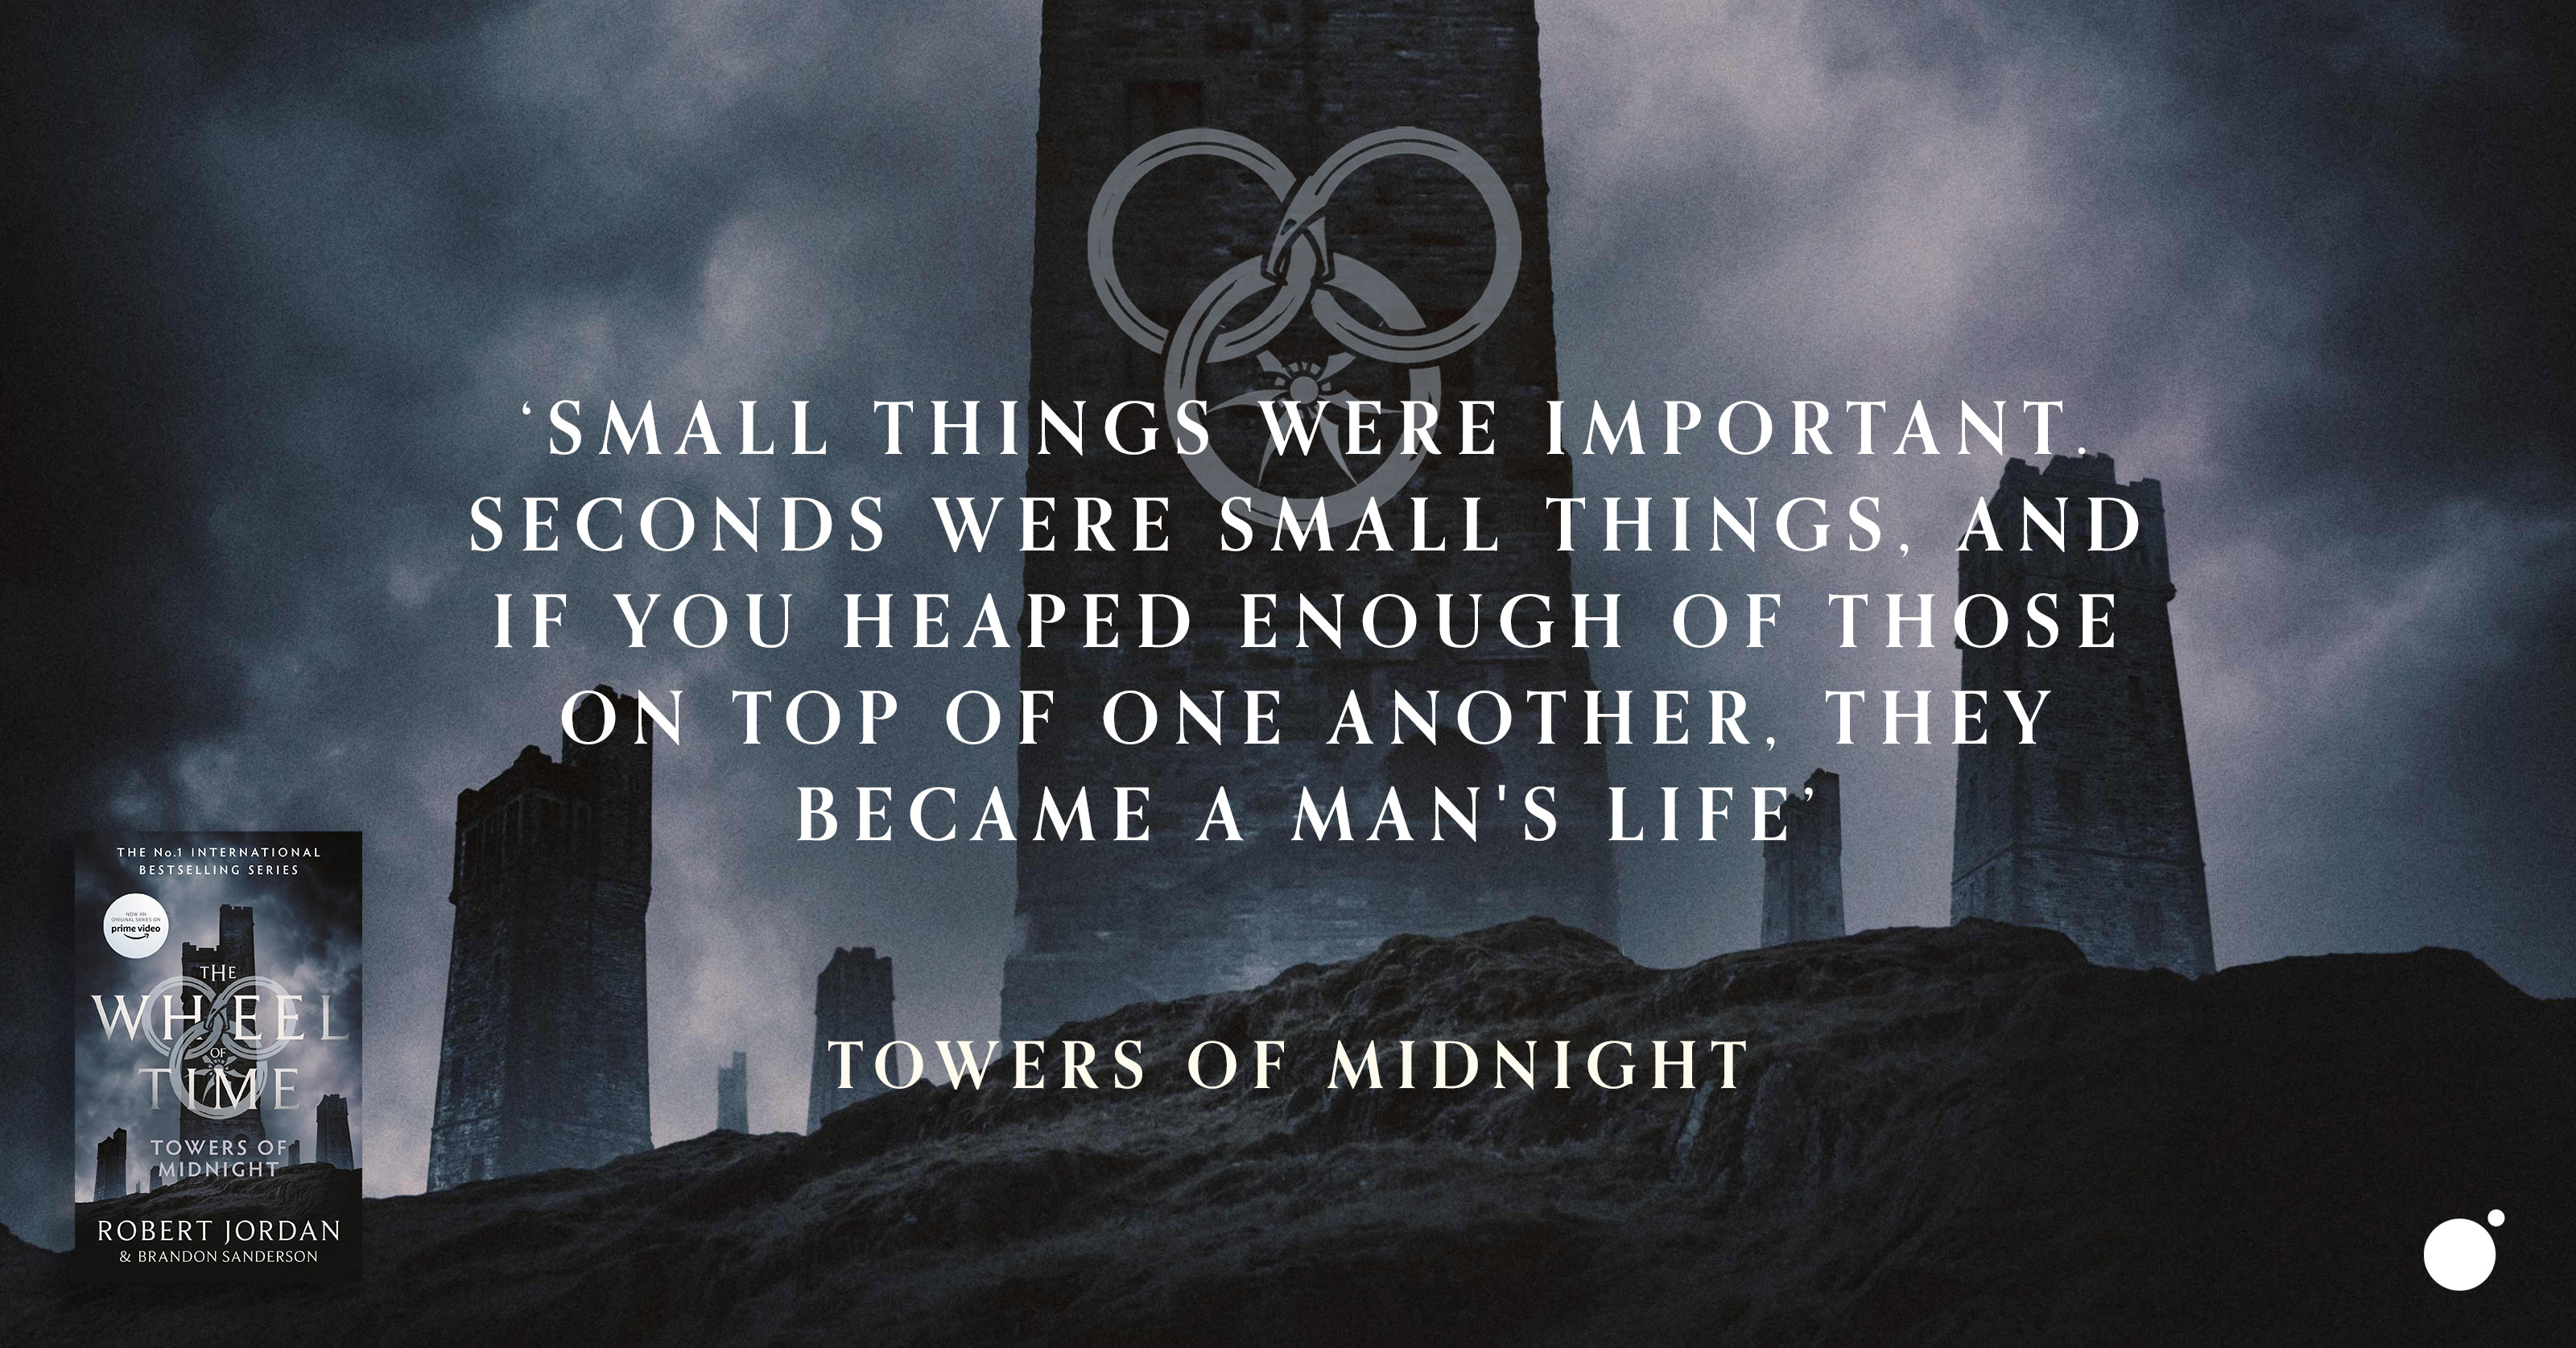 Towers of Midnight by Robert Jordan